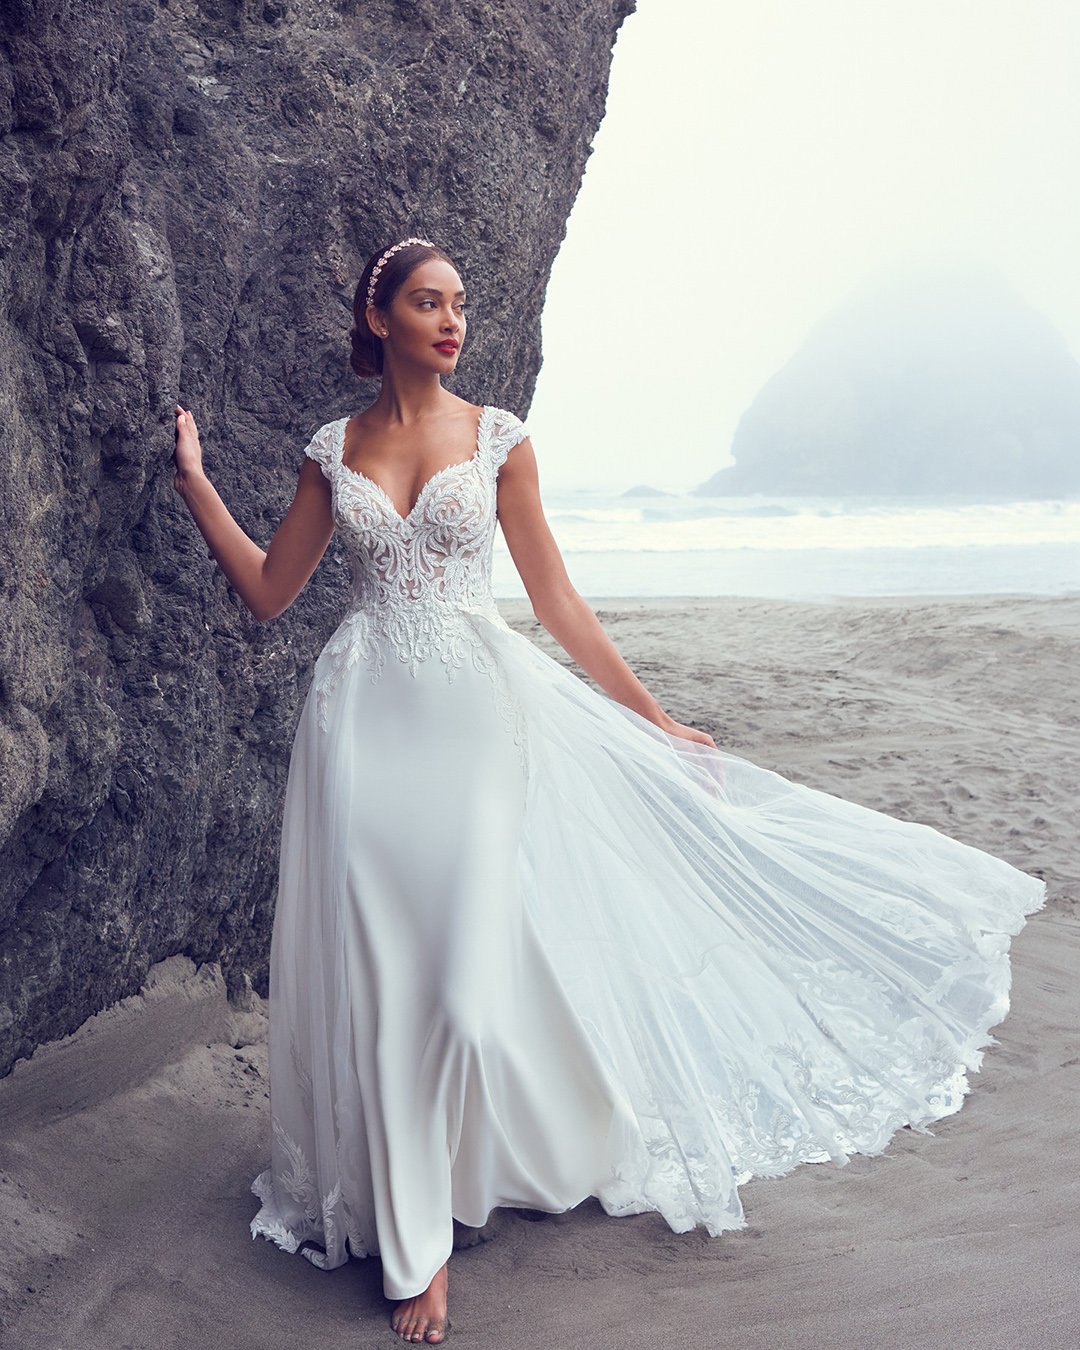 beach wedding dresses sweetheart sheath with overskirt maggiesottero